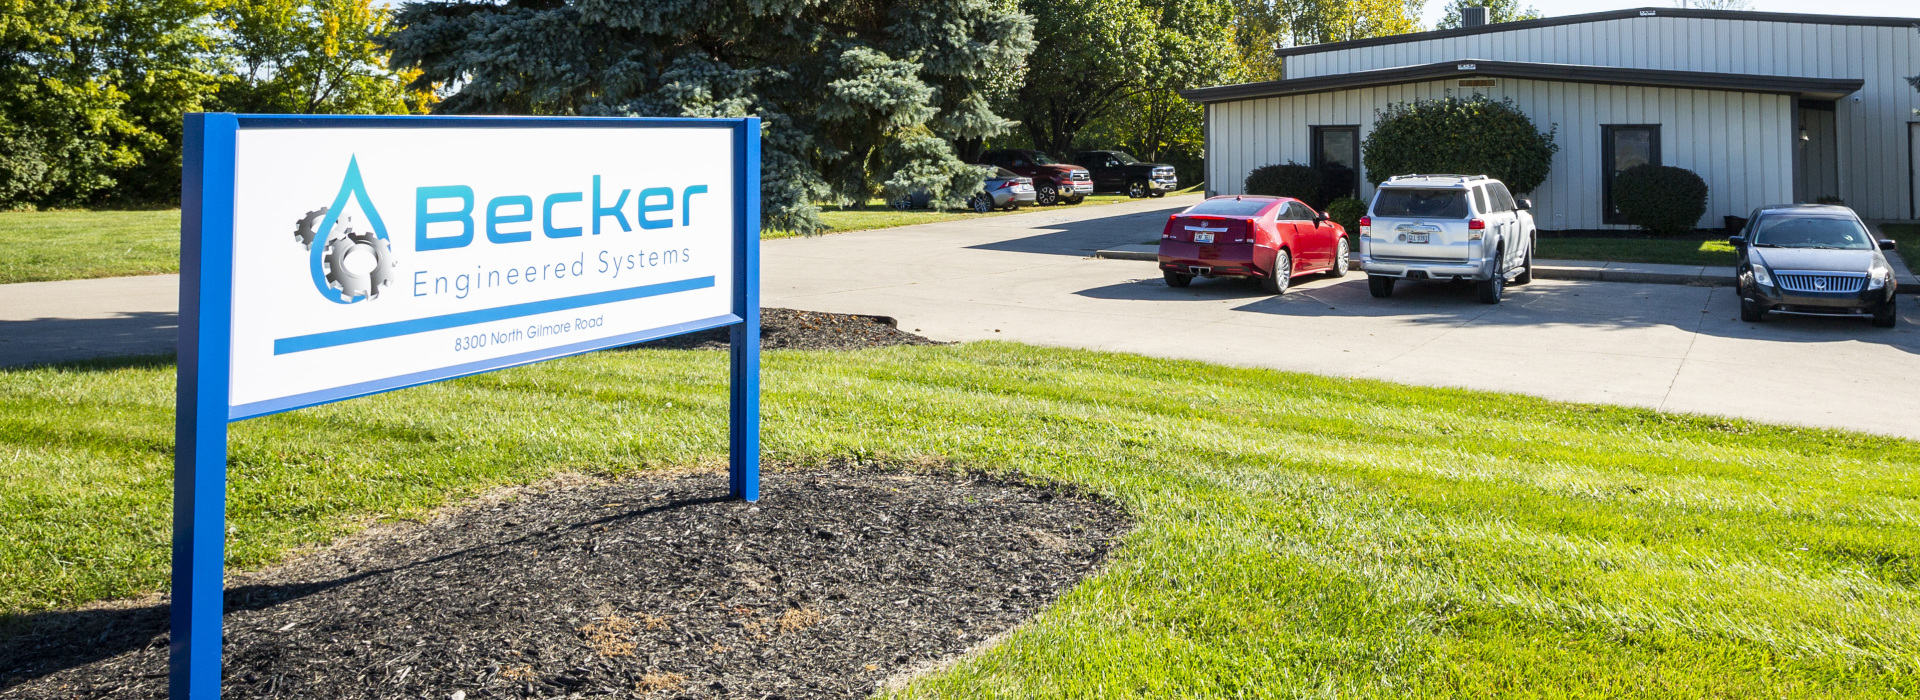 Becker company sign